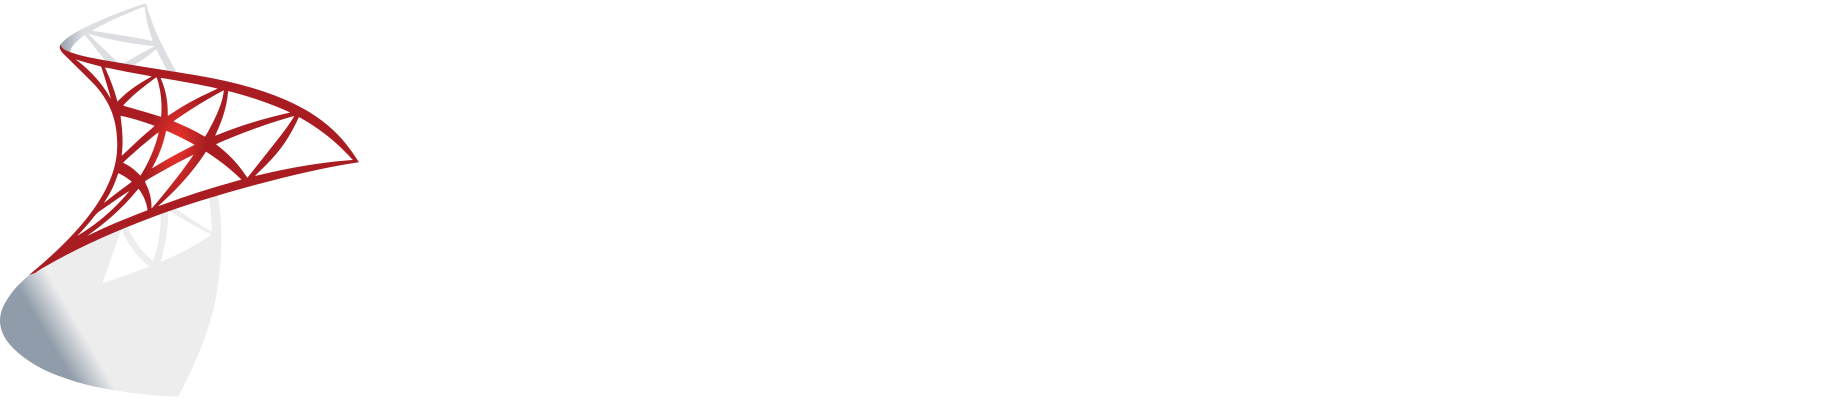 SQL Server Microsoft Tunisie